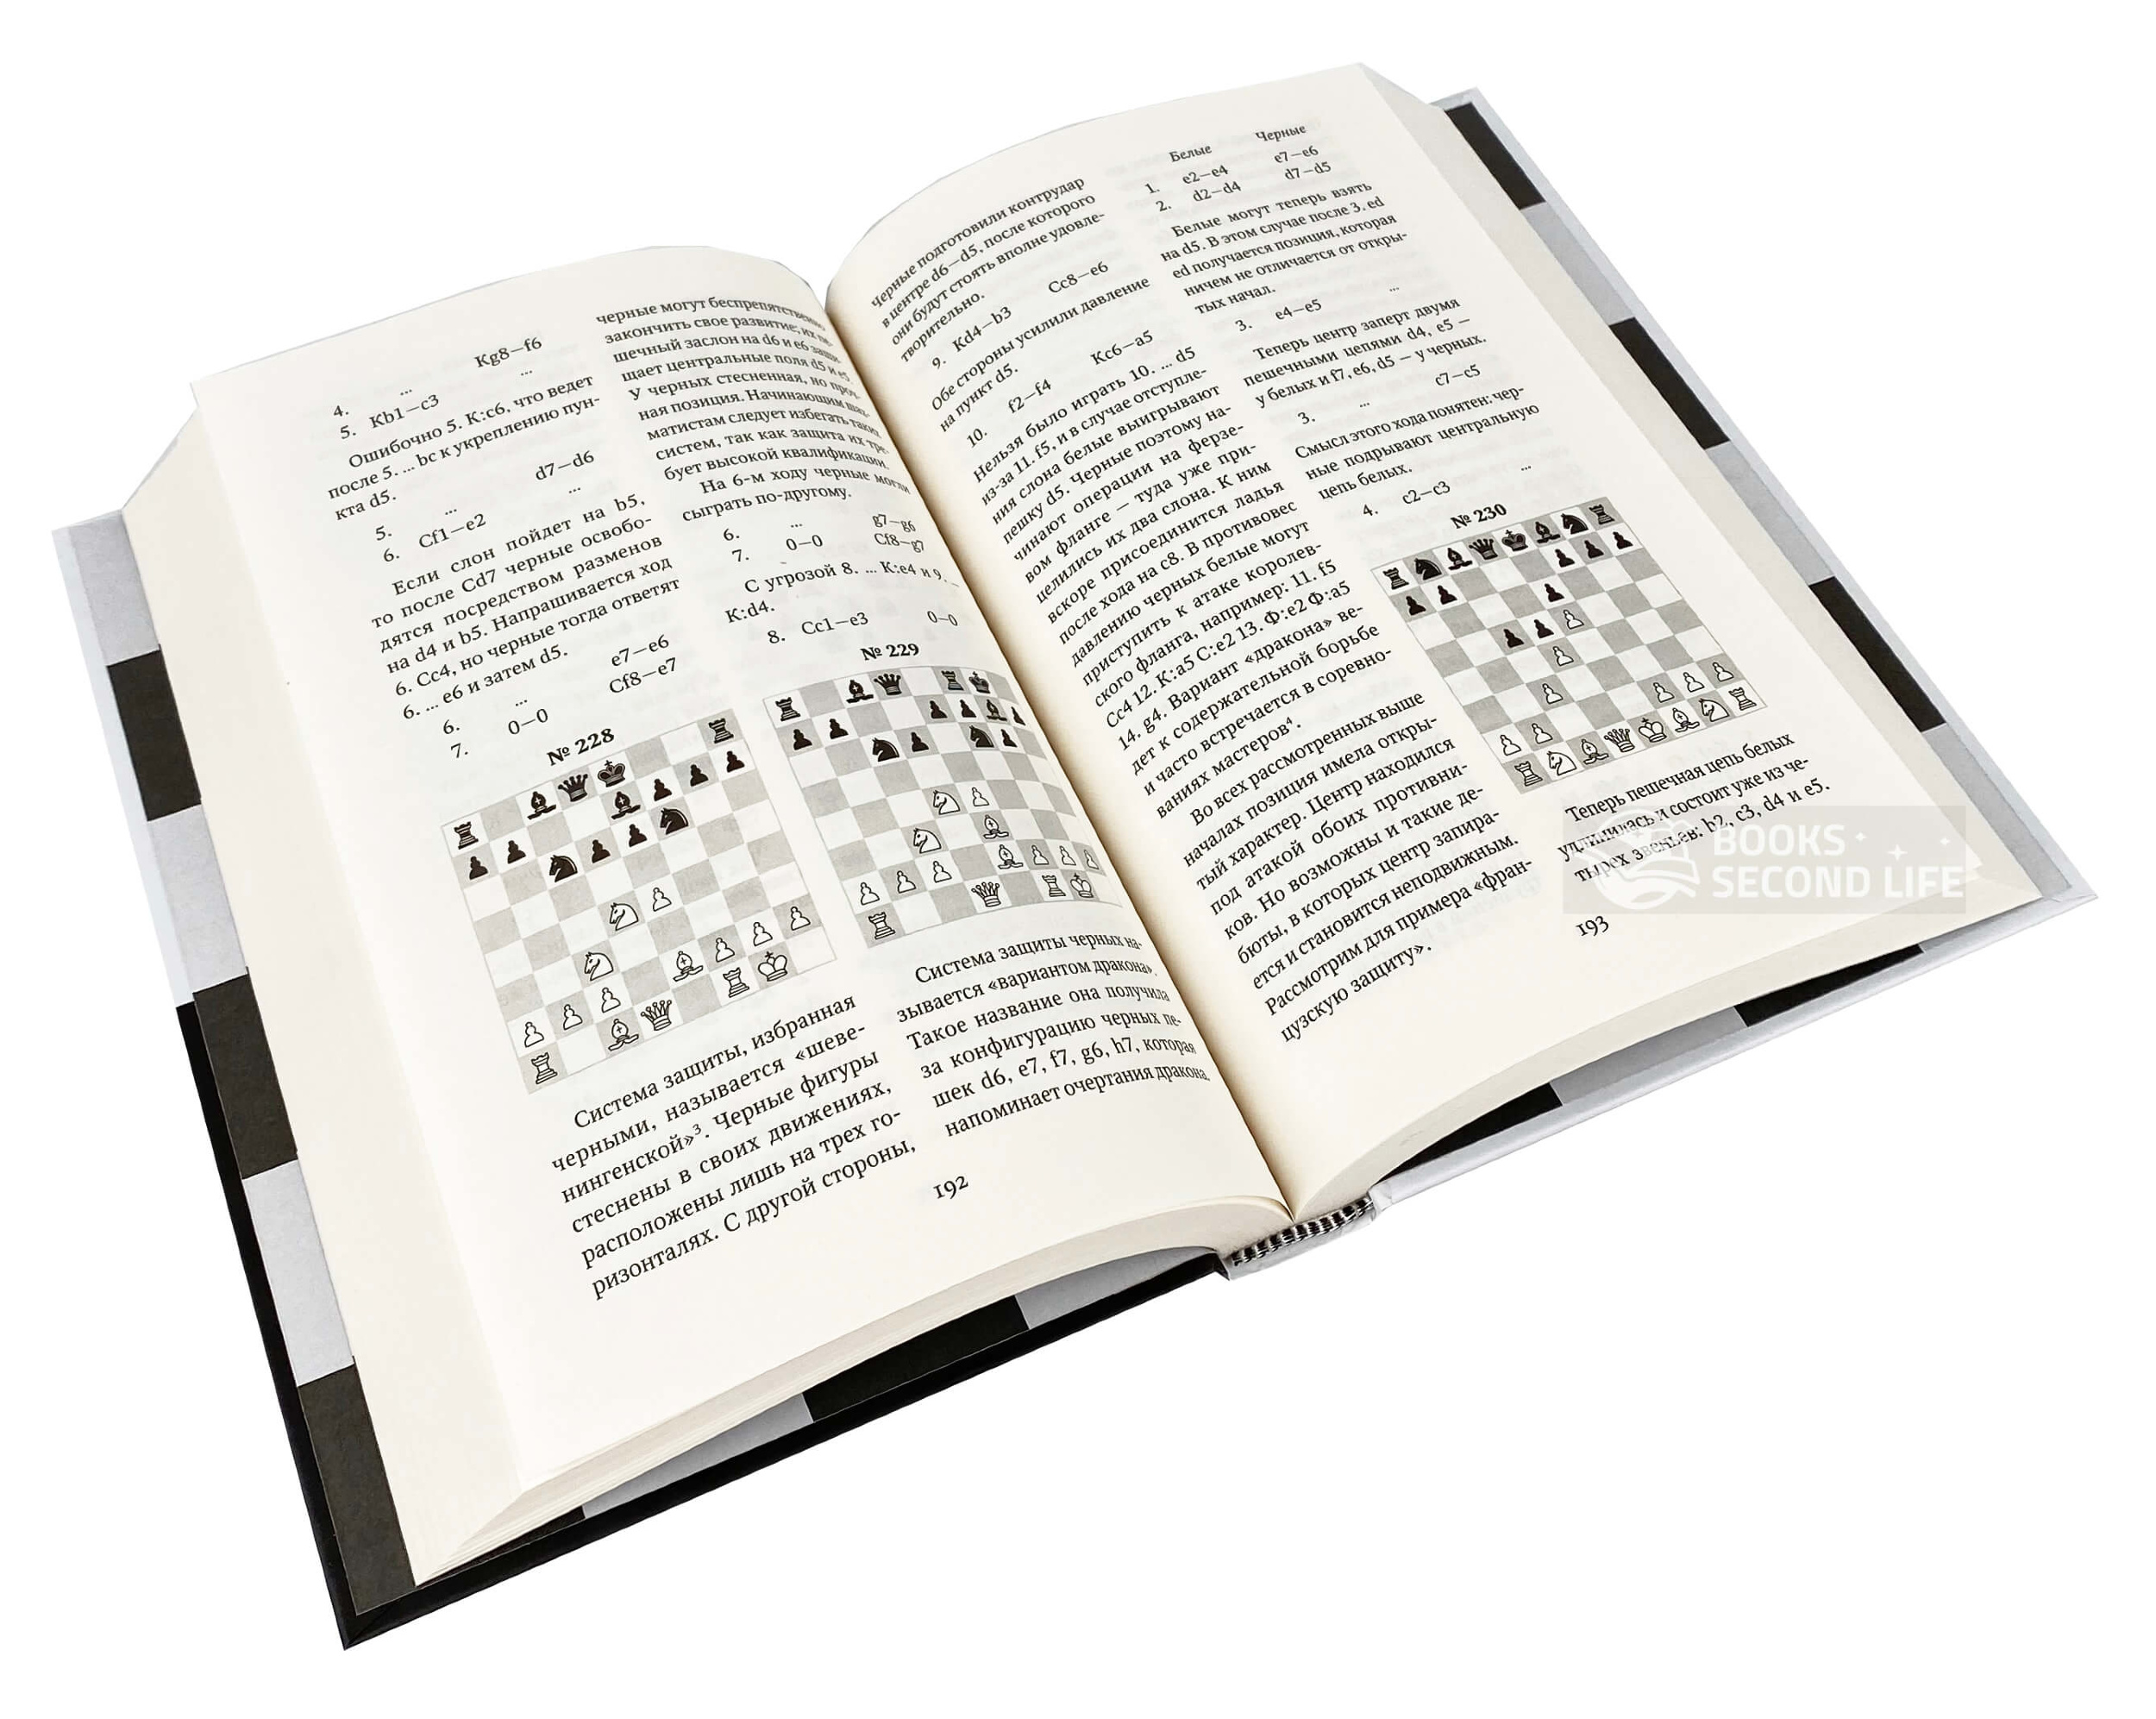 Книга начинающего шахматиста. Автор — Григорий Левенфиш. 